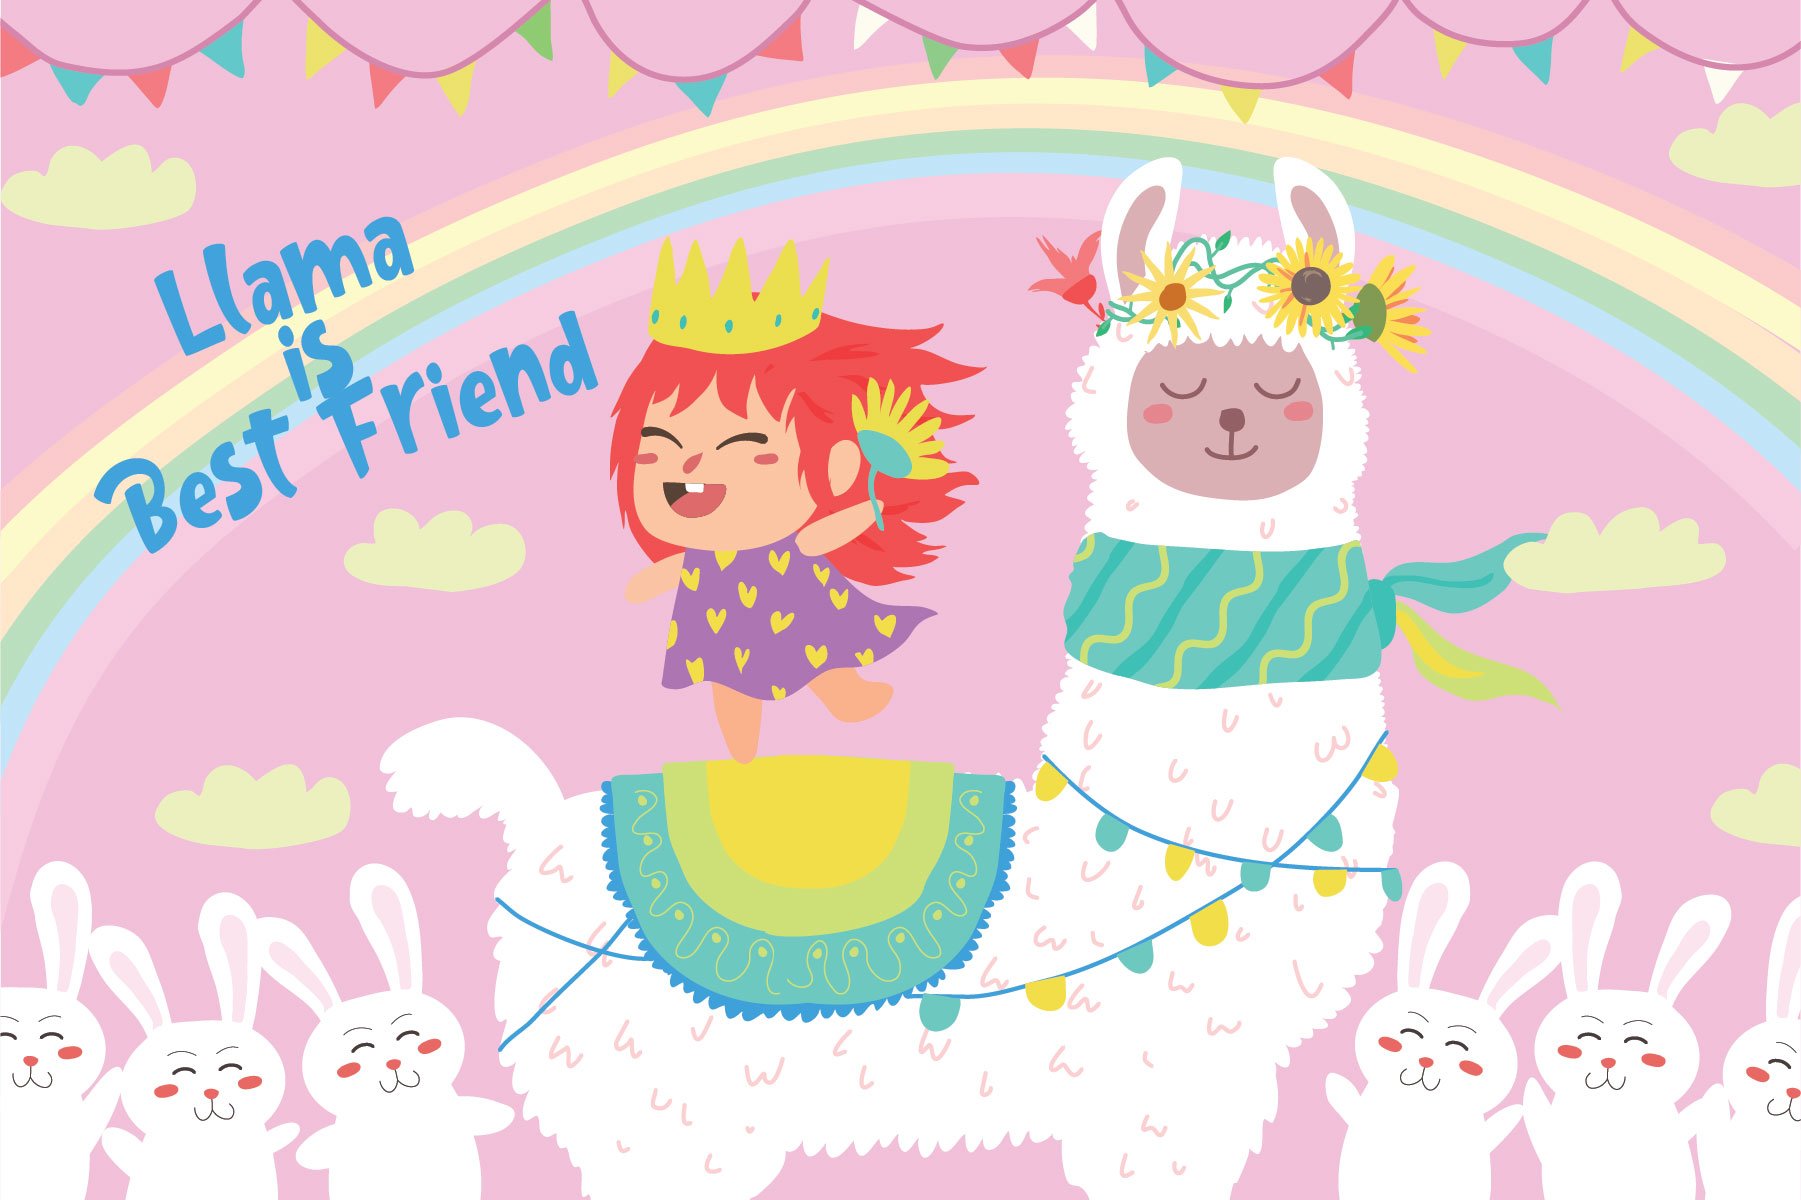 Llama Best Friend - Illustration cover image.